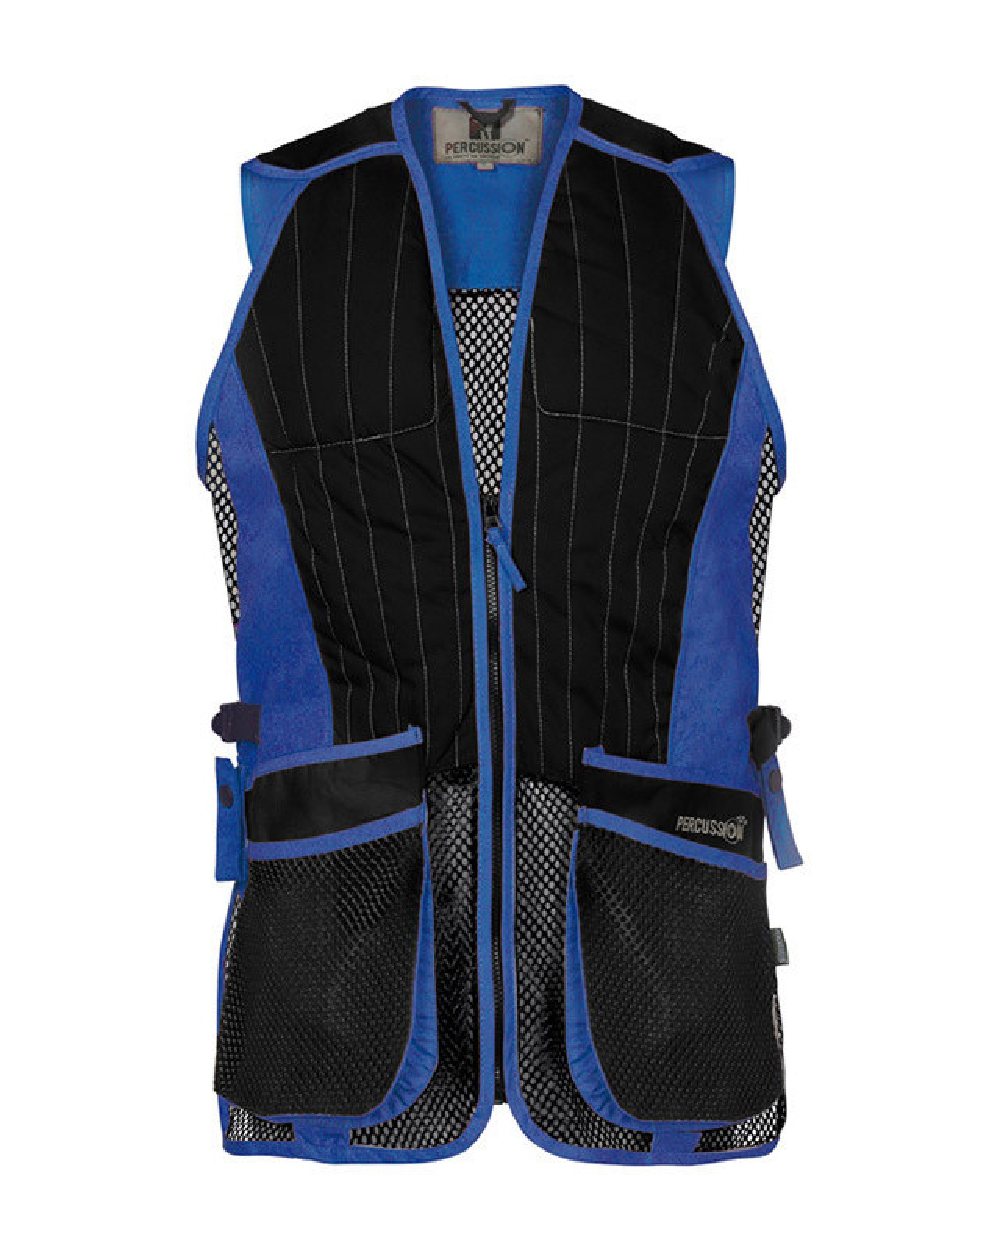 Percussion Skeet Vest in Black/Blue 